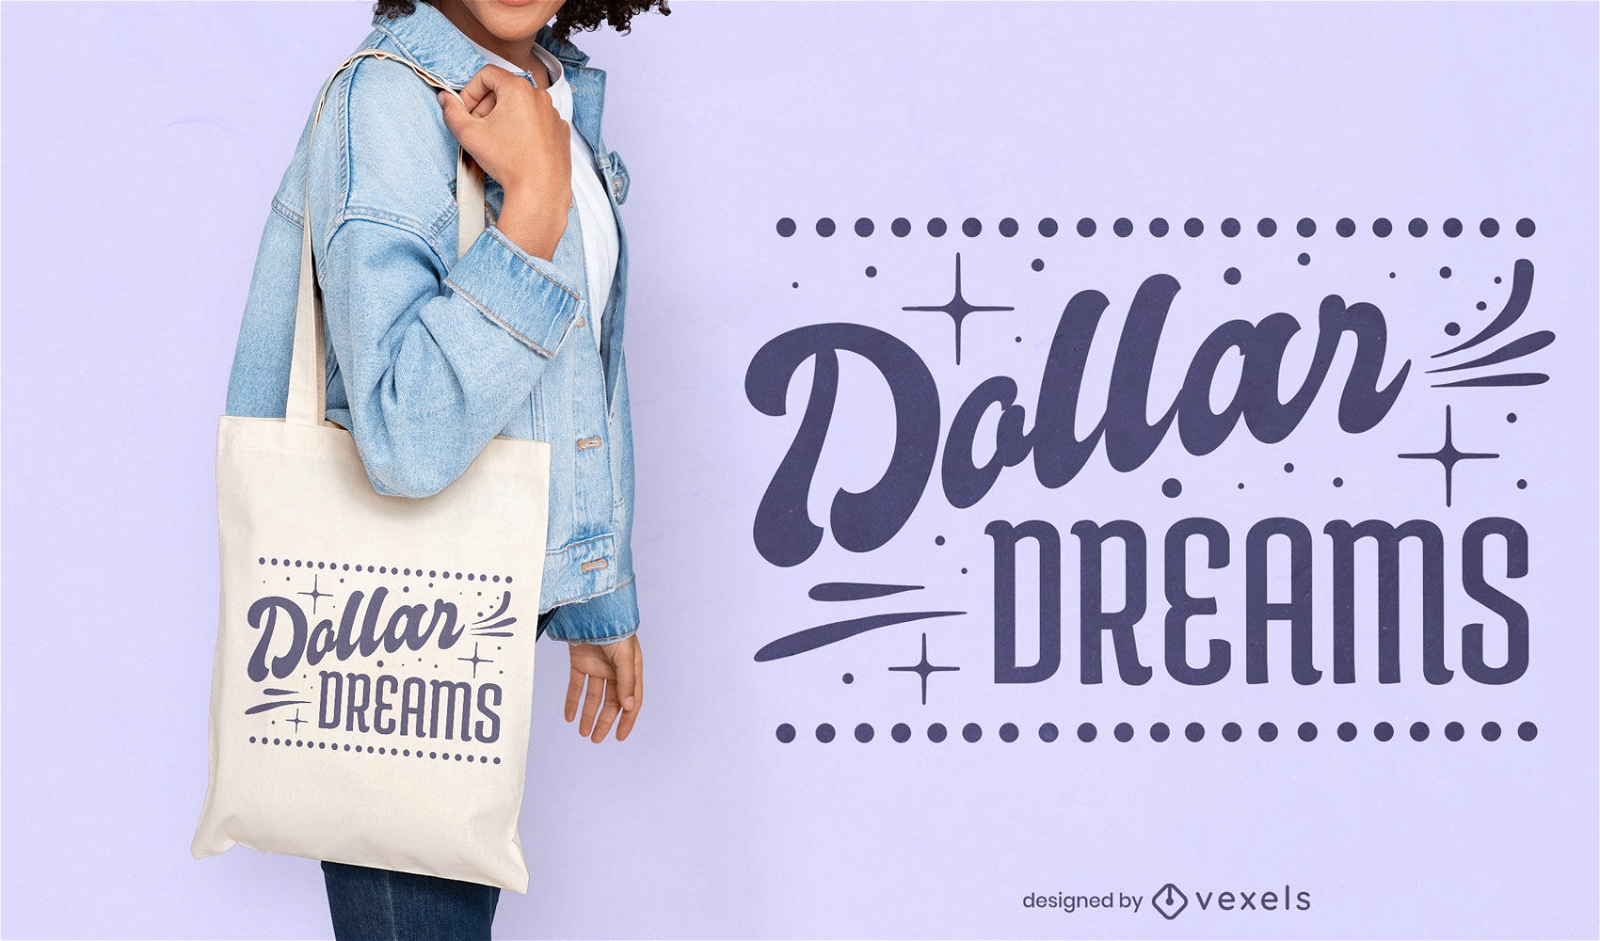 Dollar dreams quote tote bag design